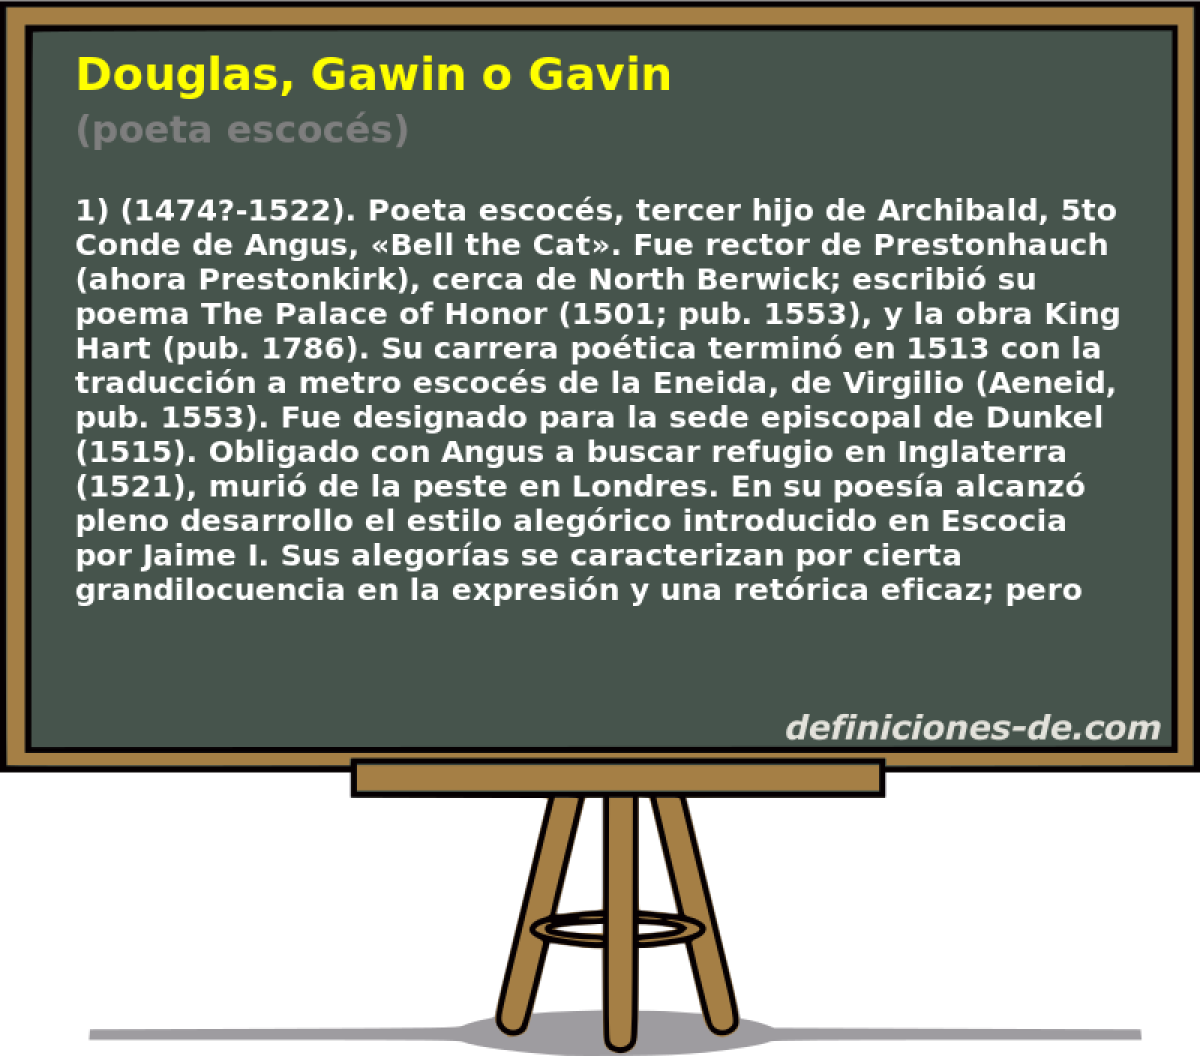 Douglas, Gawin o Gavin (poeta escocs)